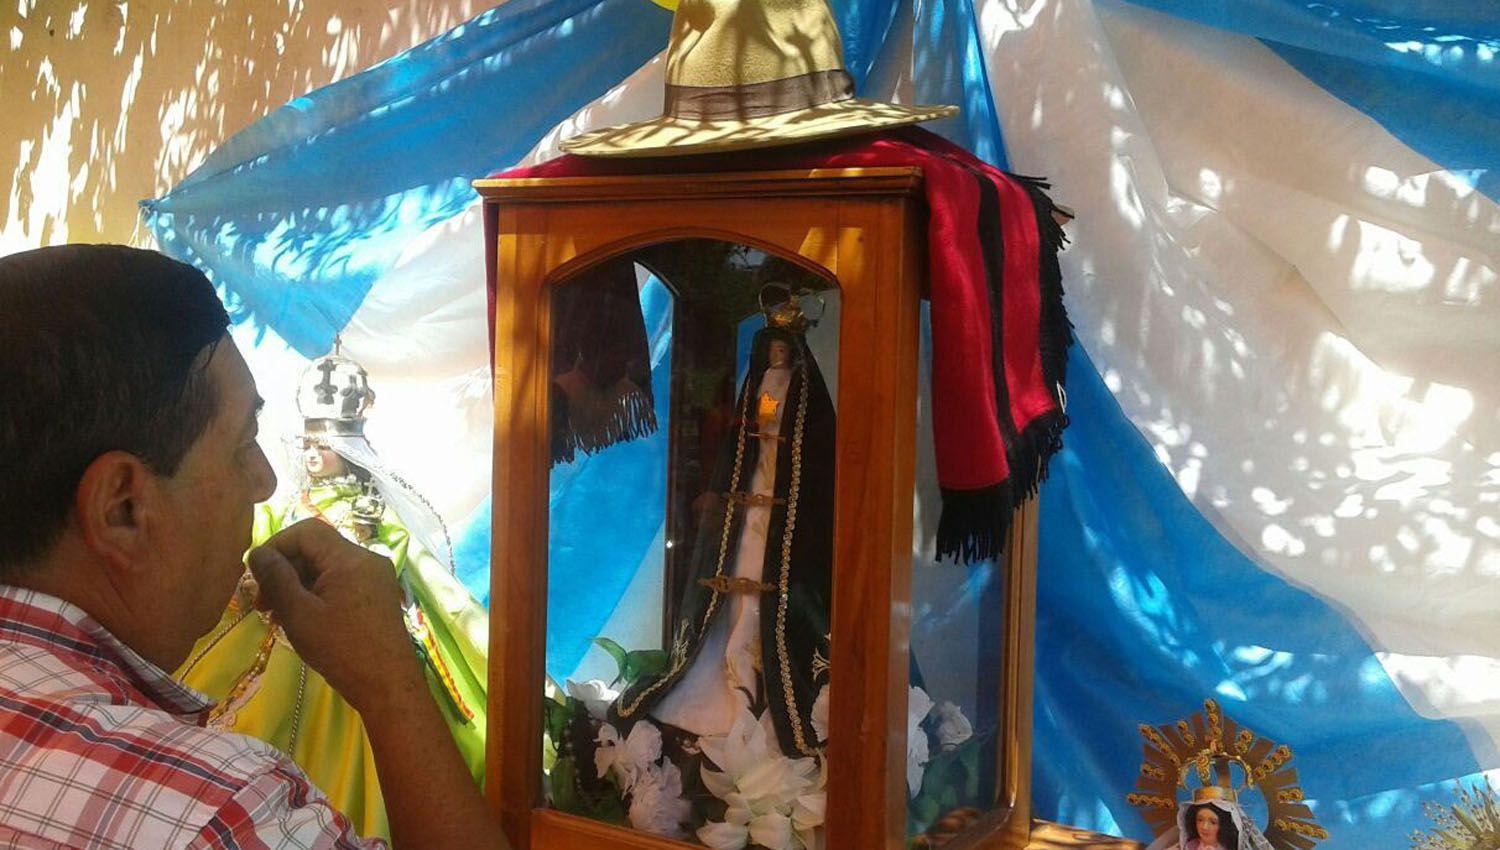 La Virgen de Huachana seraacute coronada en la fiesta del domingo 31